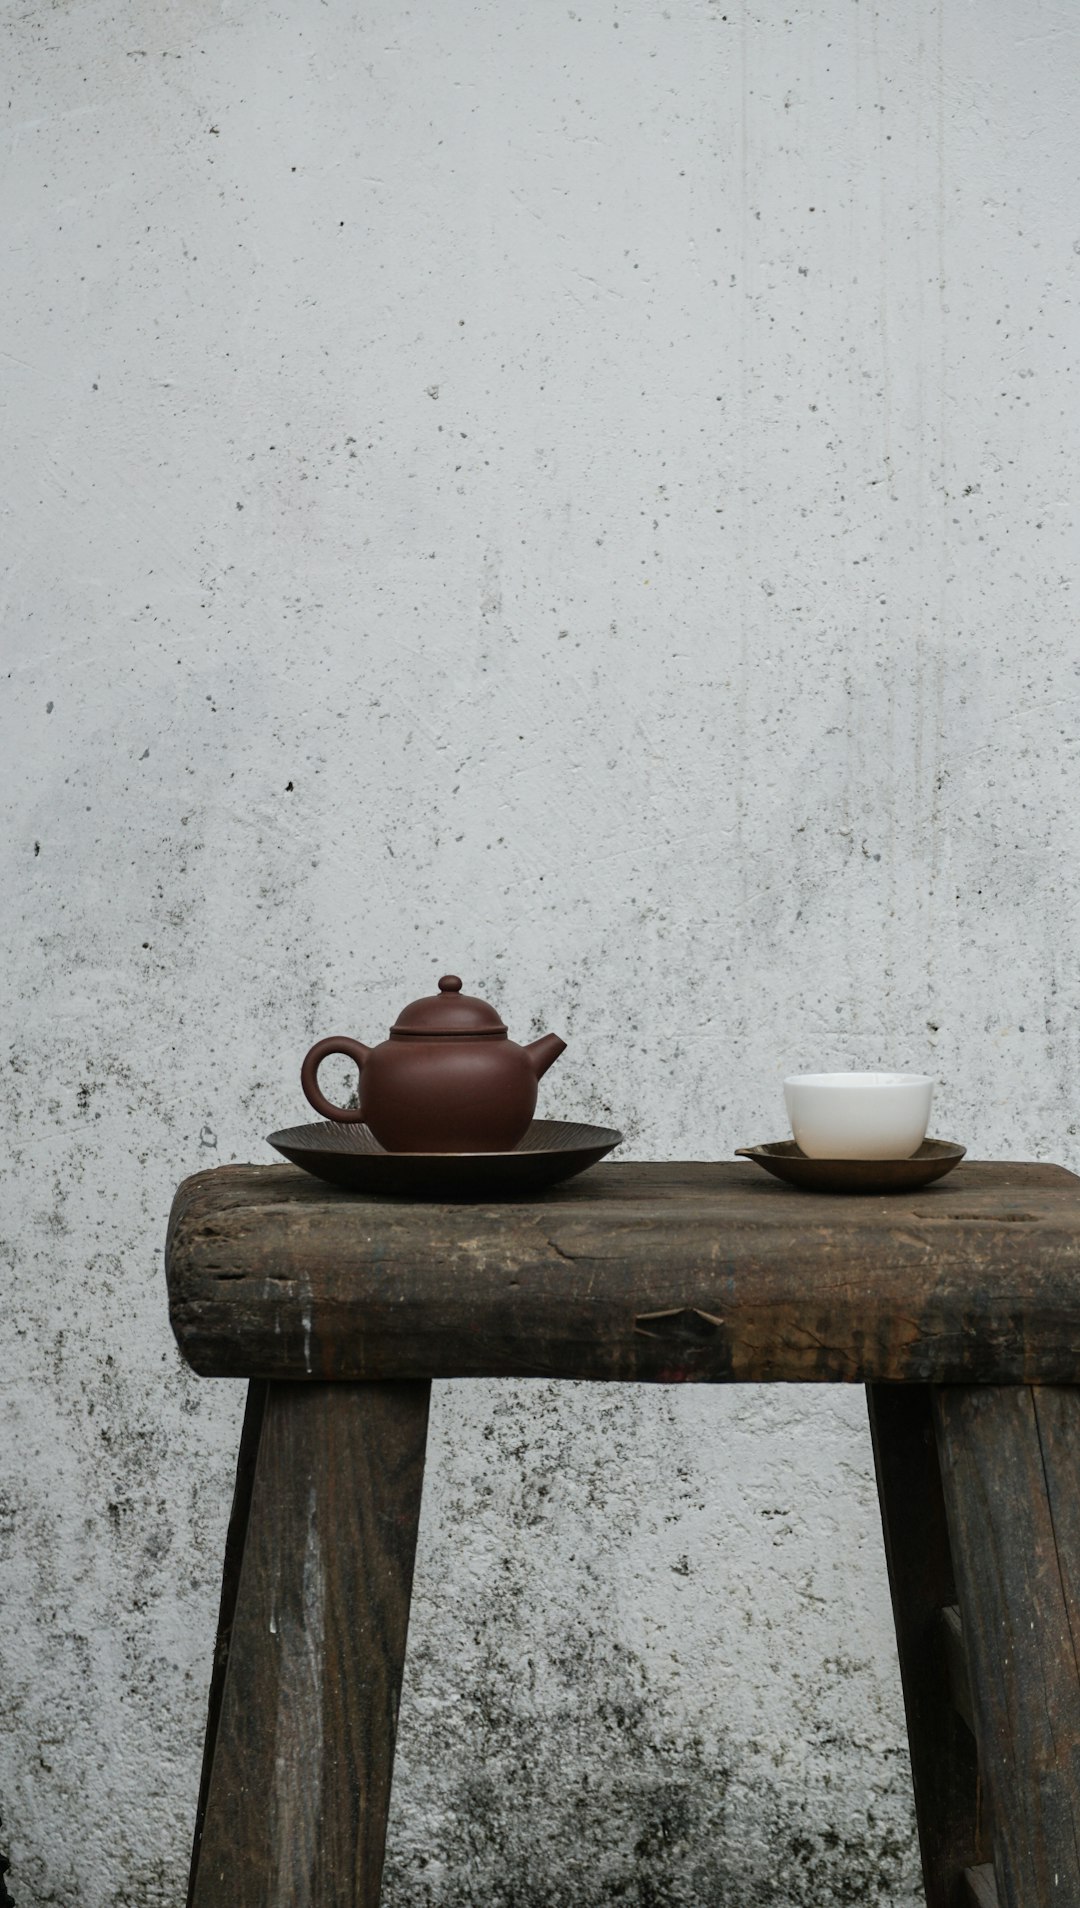  brown teapot pot container utensils